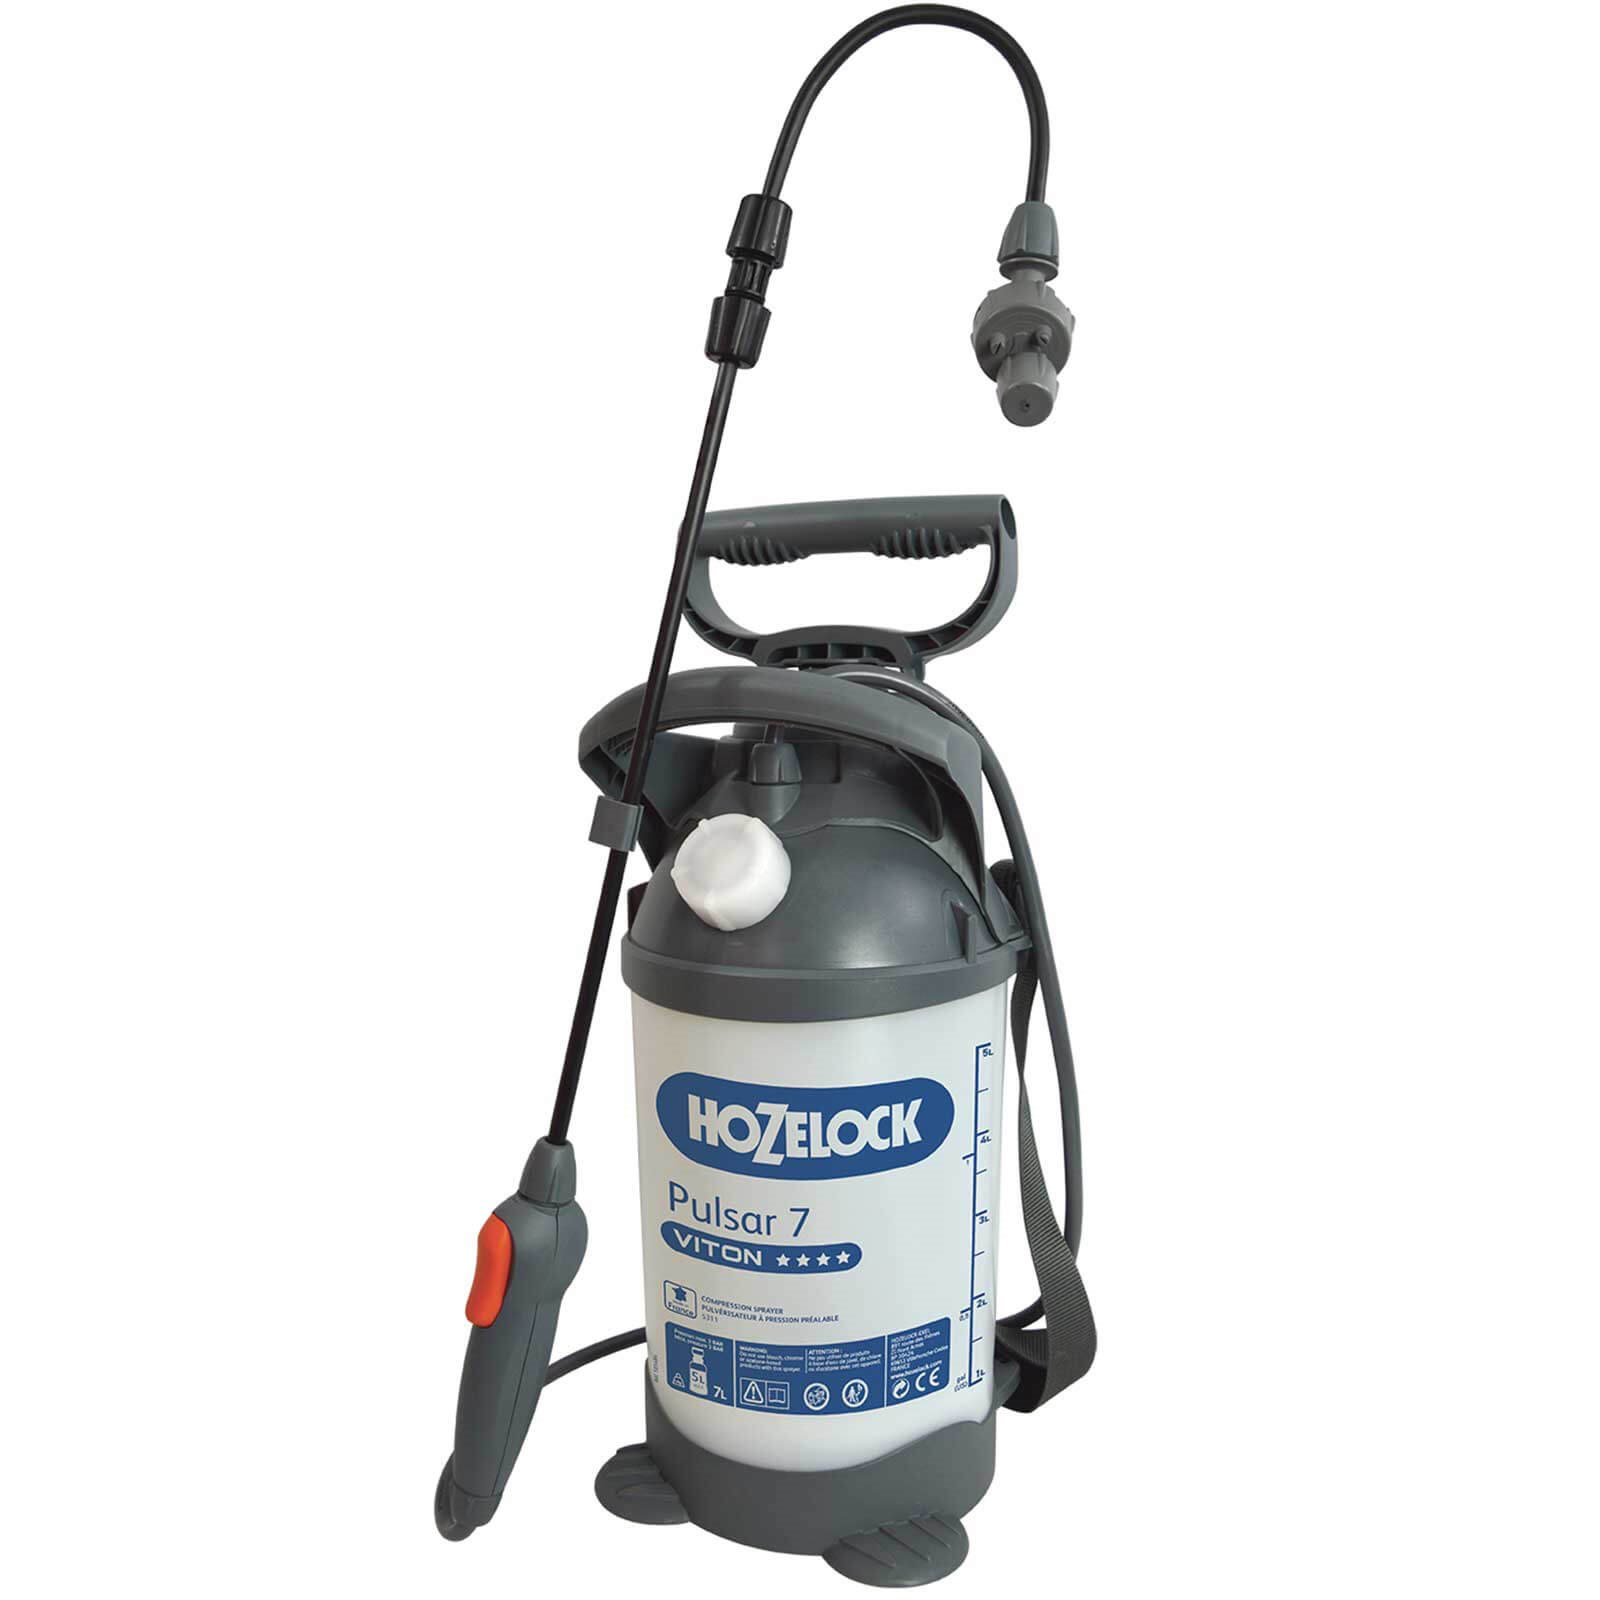 Hozelock PULSAR VITON Chemical Liquid Pressure Sprayer